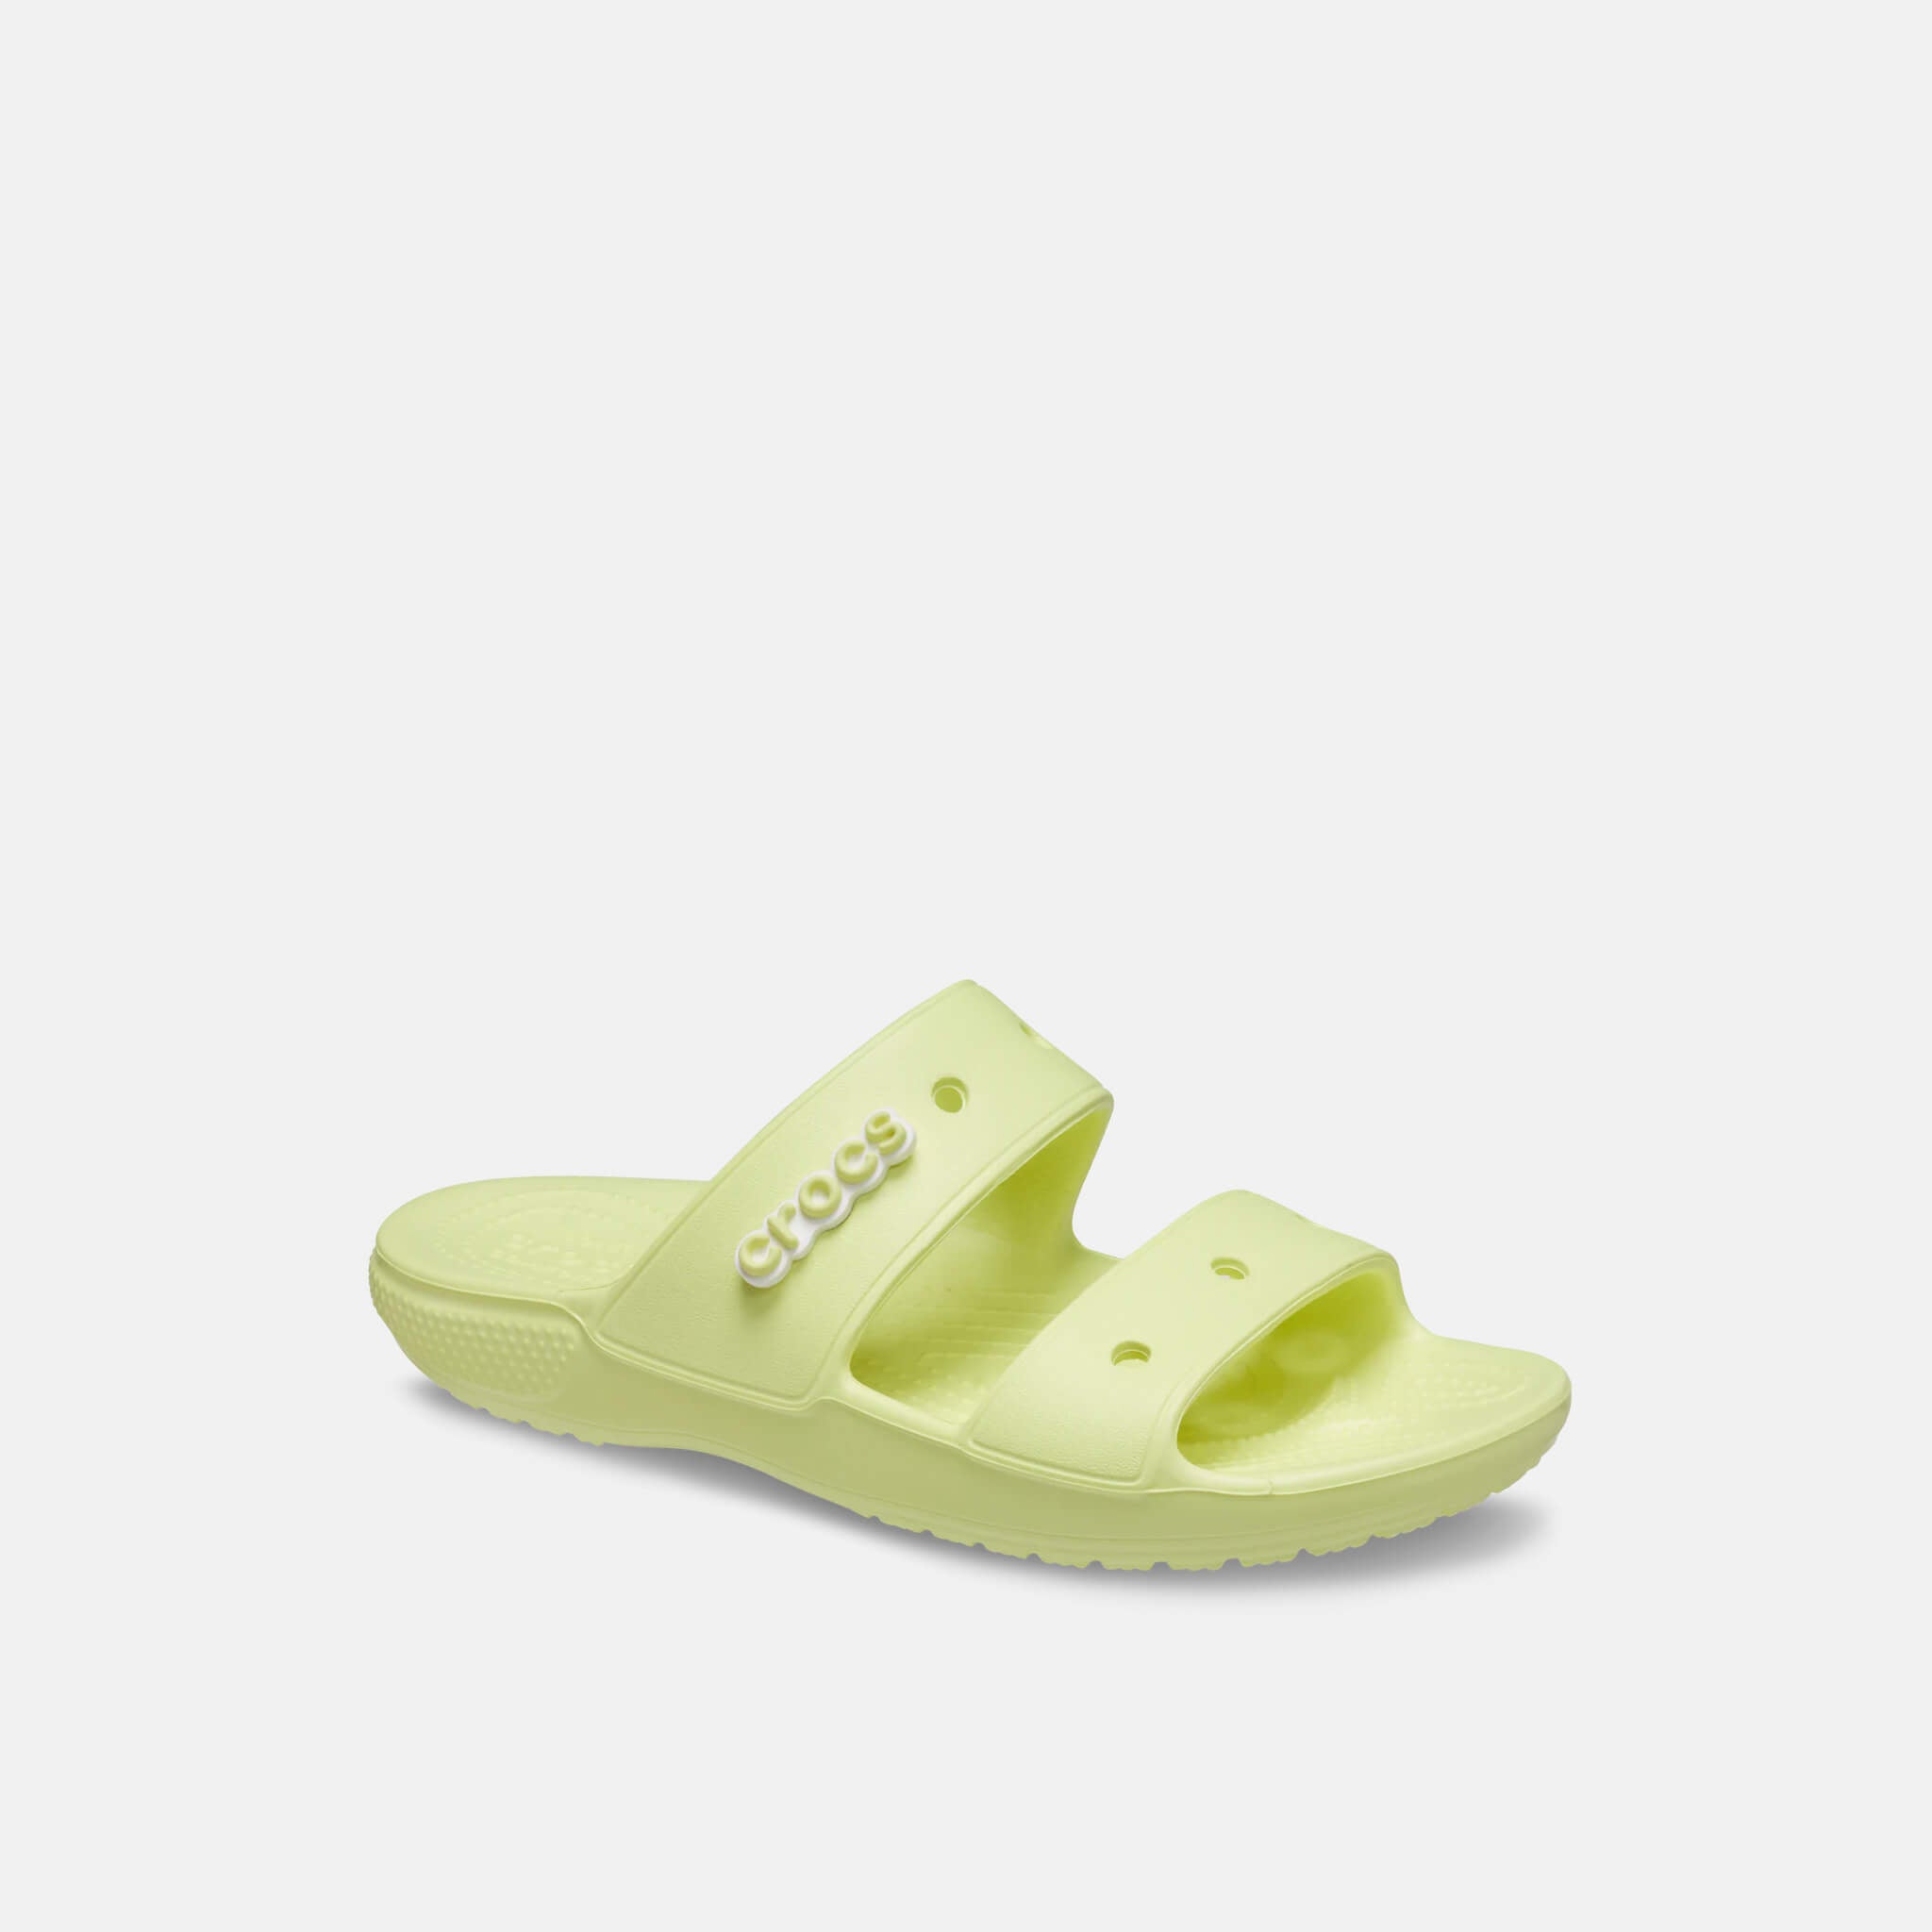 Classic Crocs Sandal Sulphur